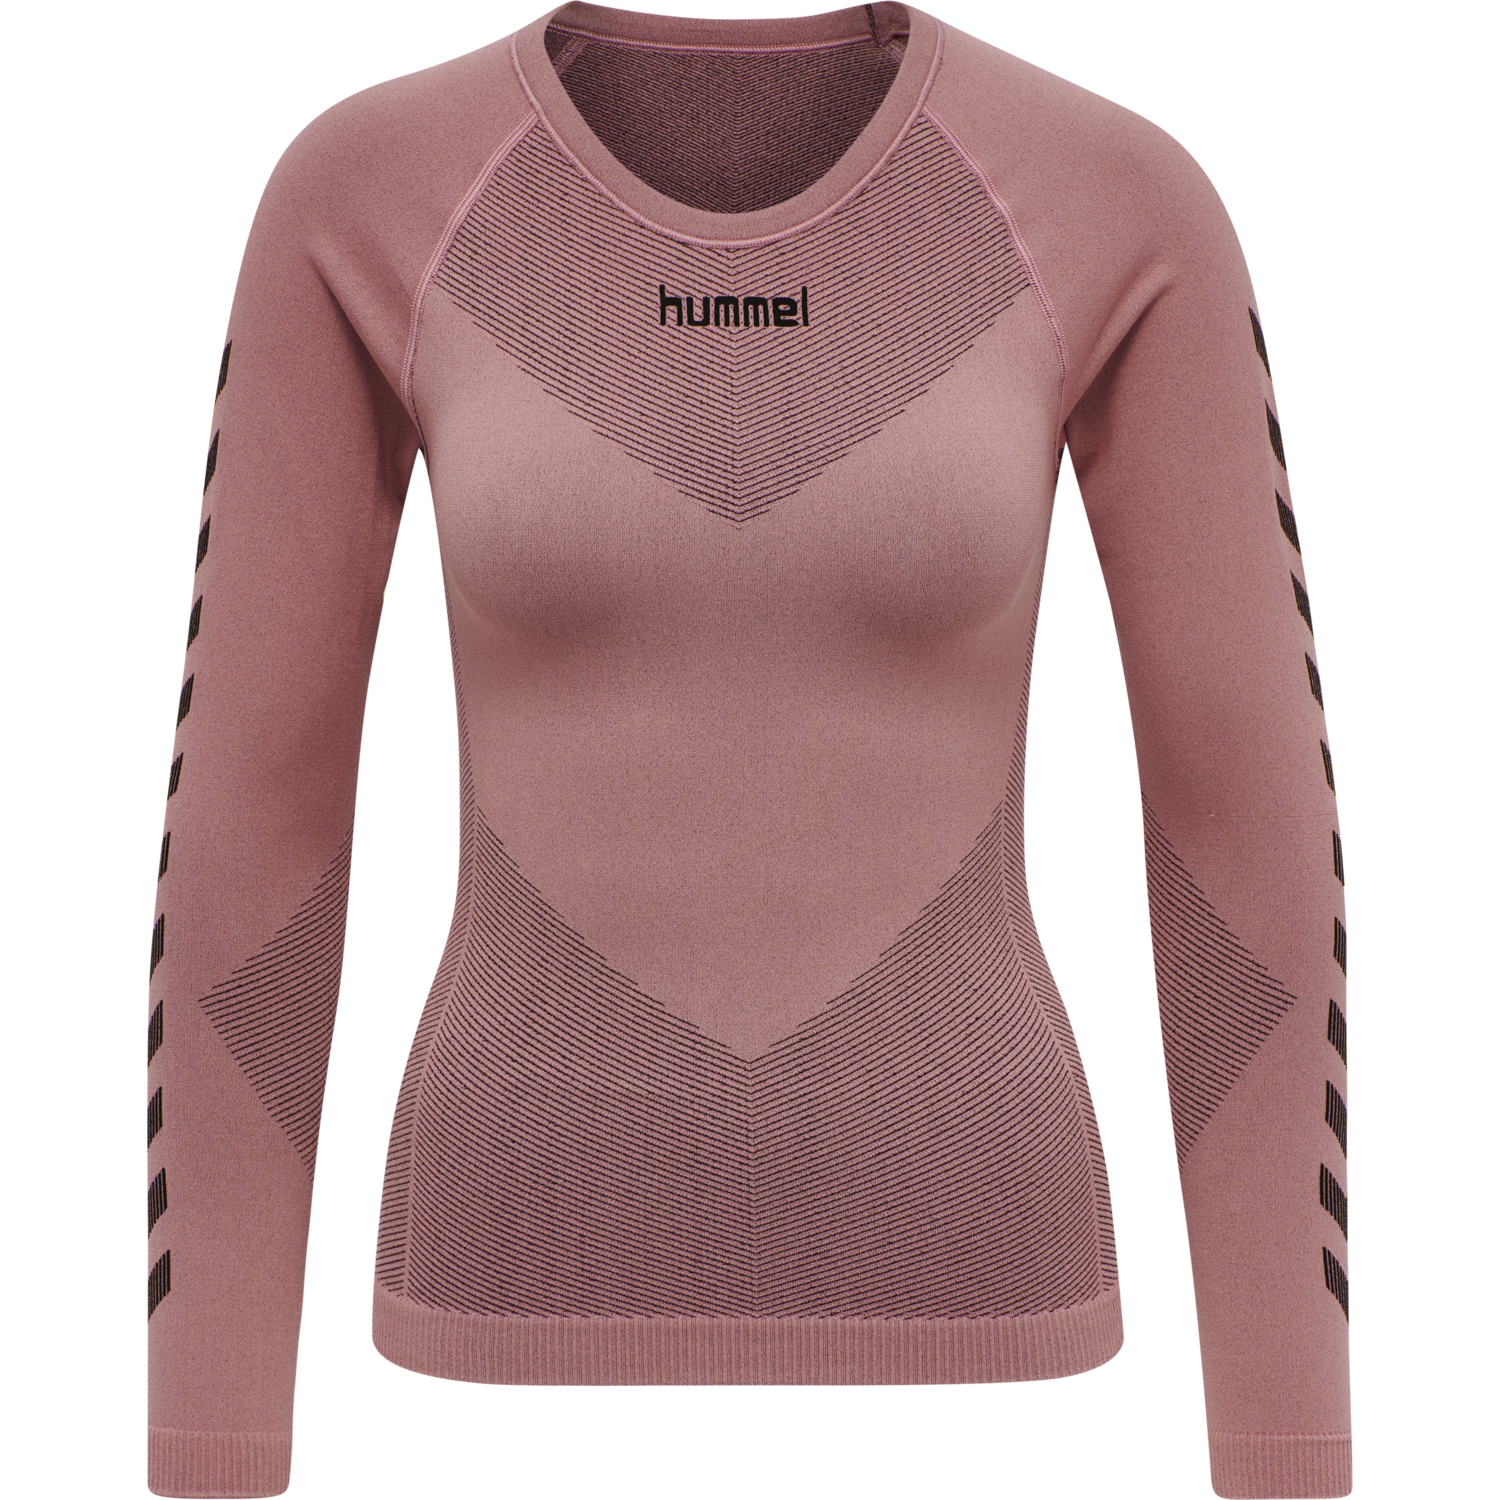 Hummel First Comfort Jersey Shortsleeve Funktions Kompressions Shirt 003740 2001 